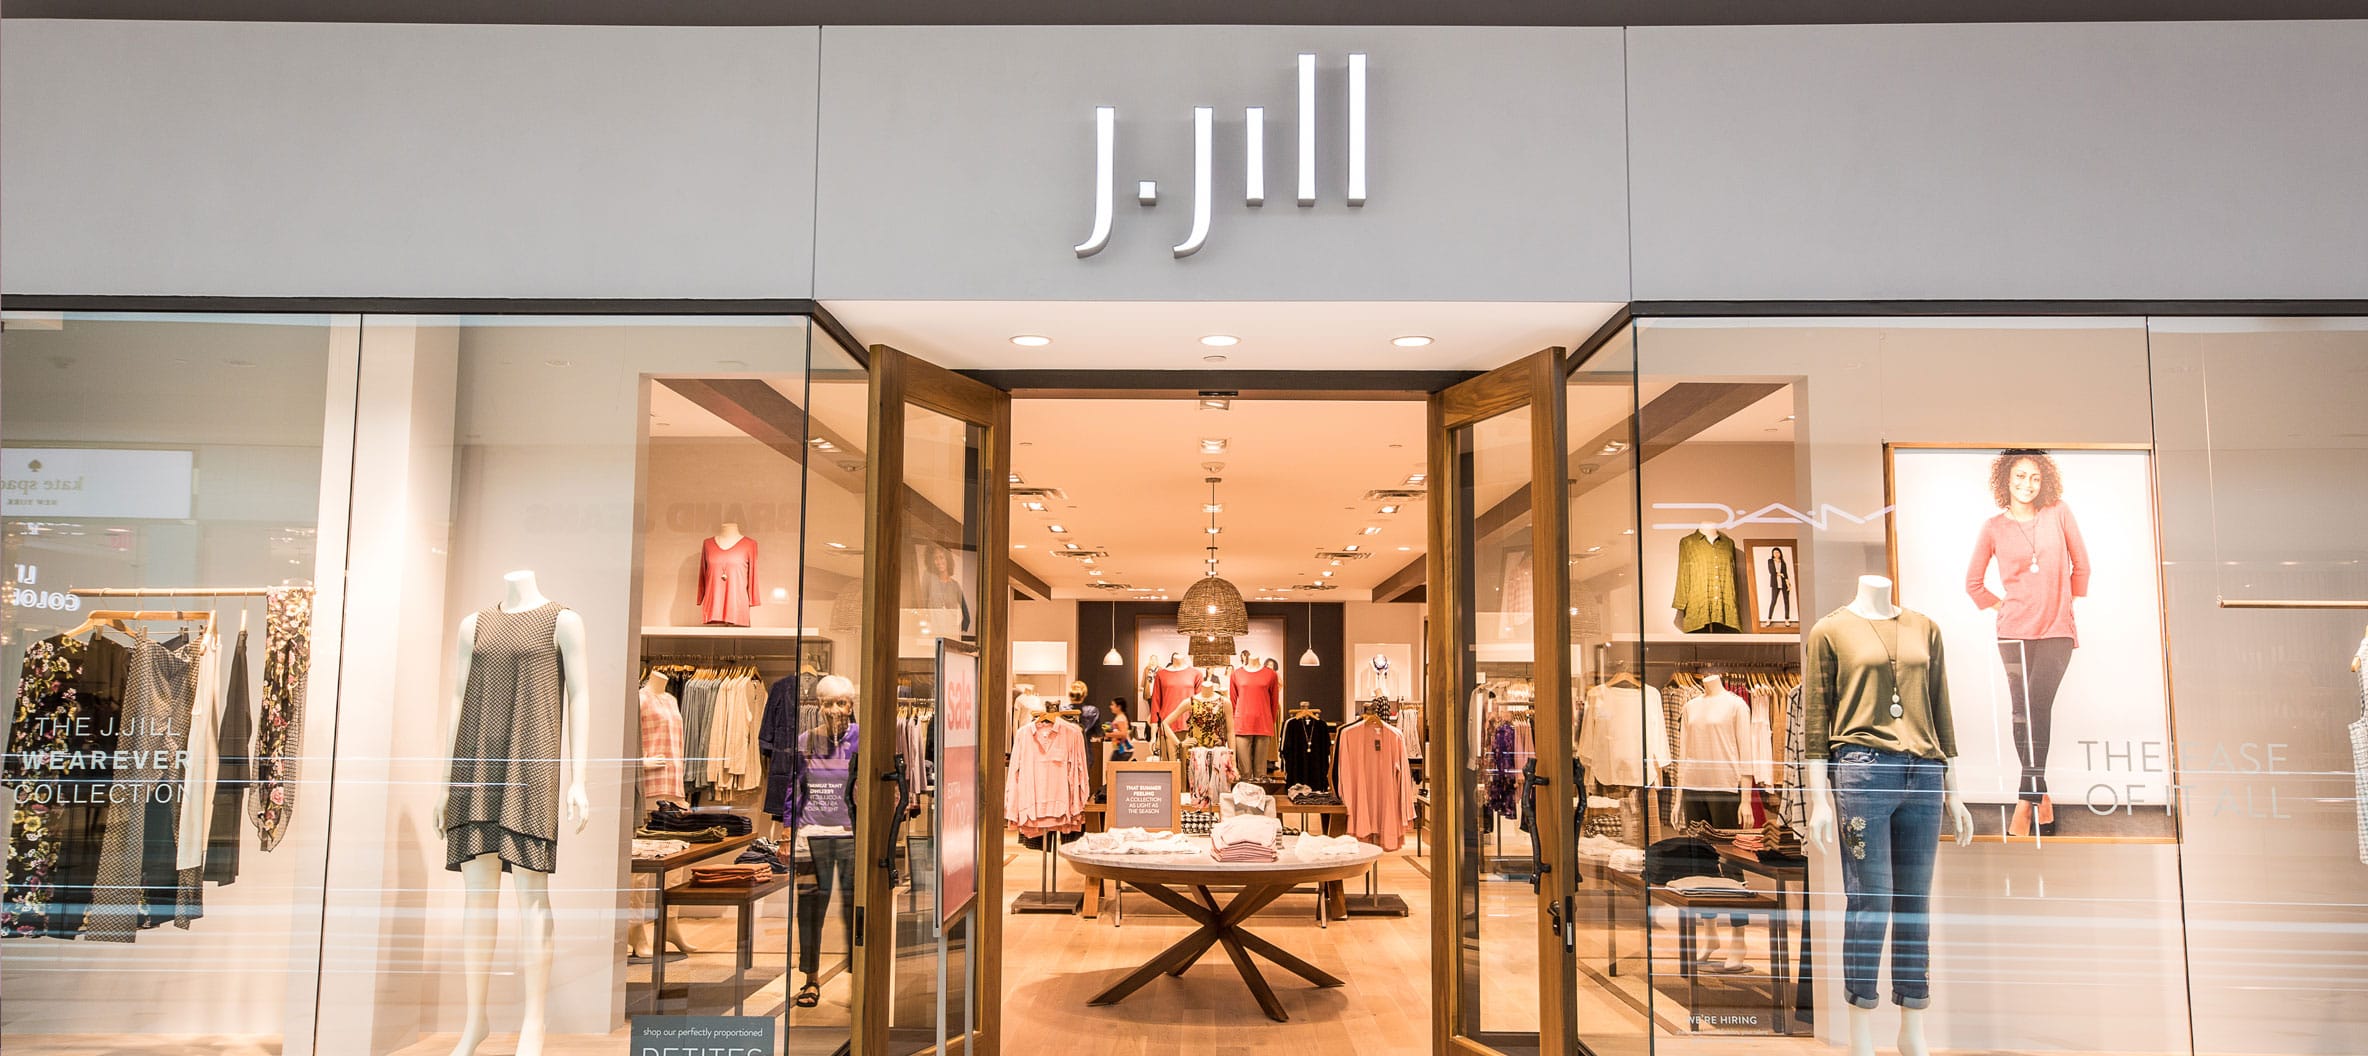 stores like j jill